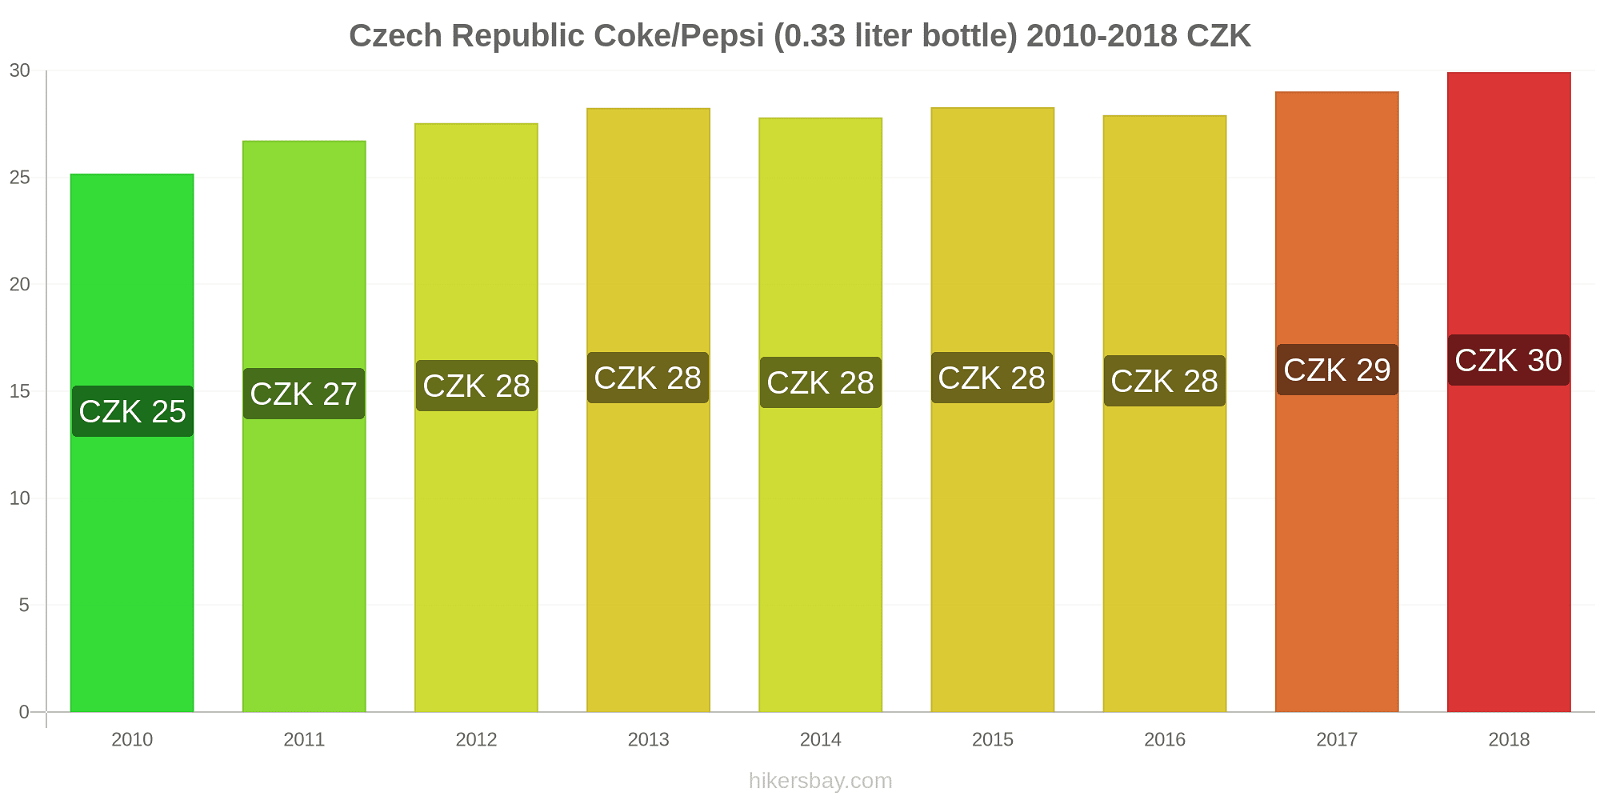 Czech Republic price changes Coke/Pepsi (0.33 liter bottle) hikersbay.com